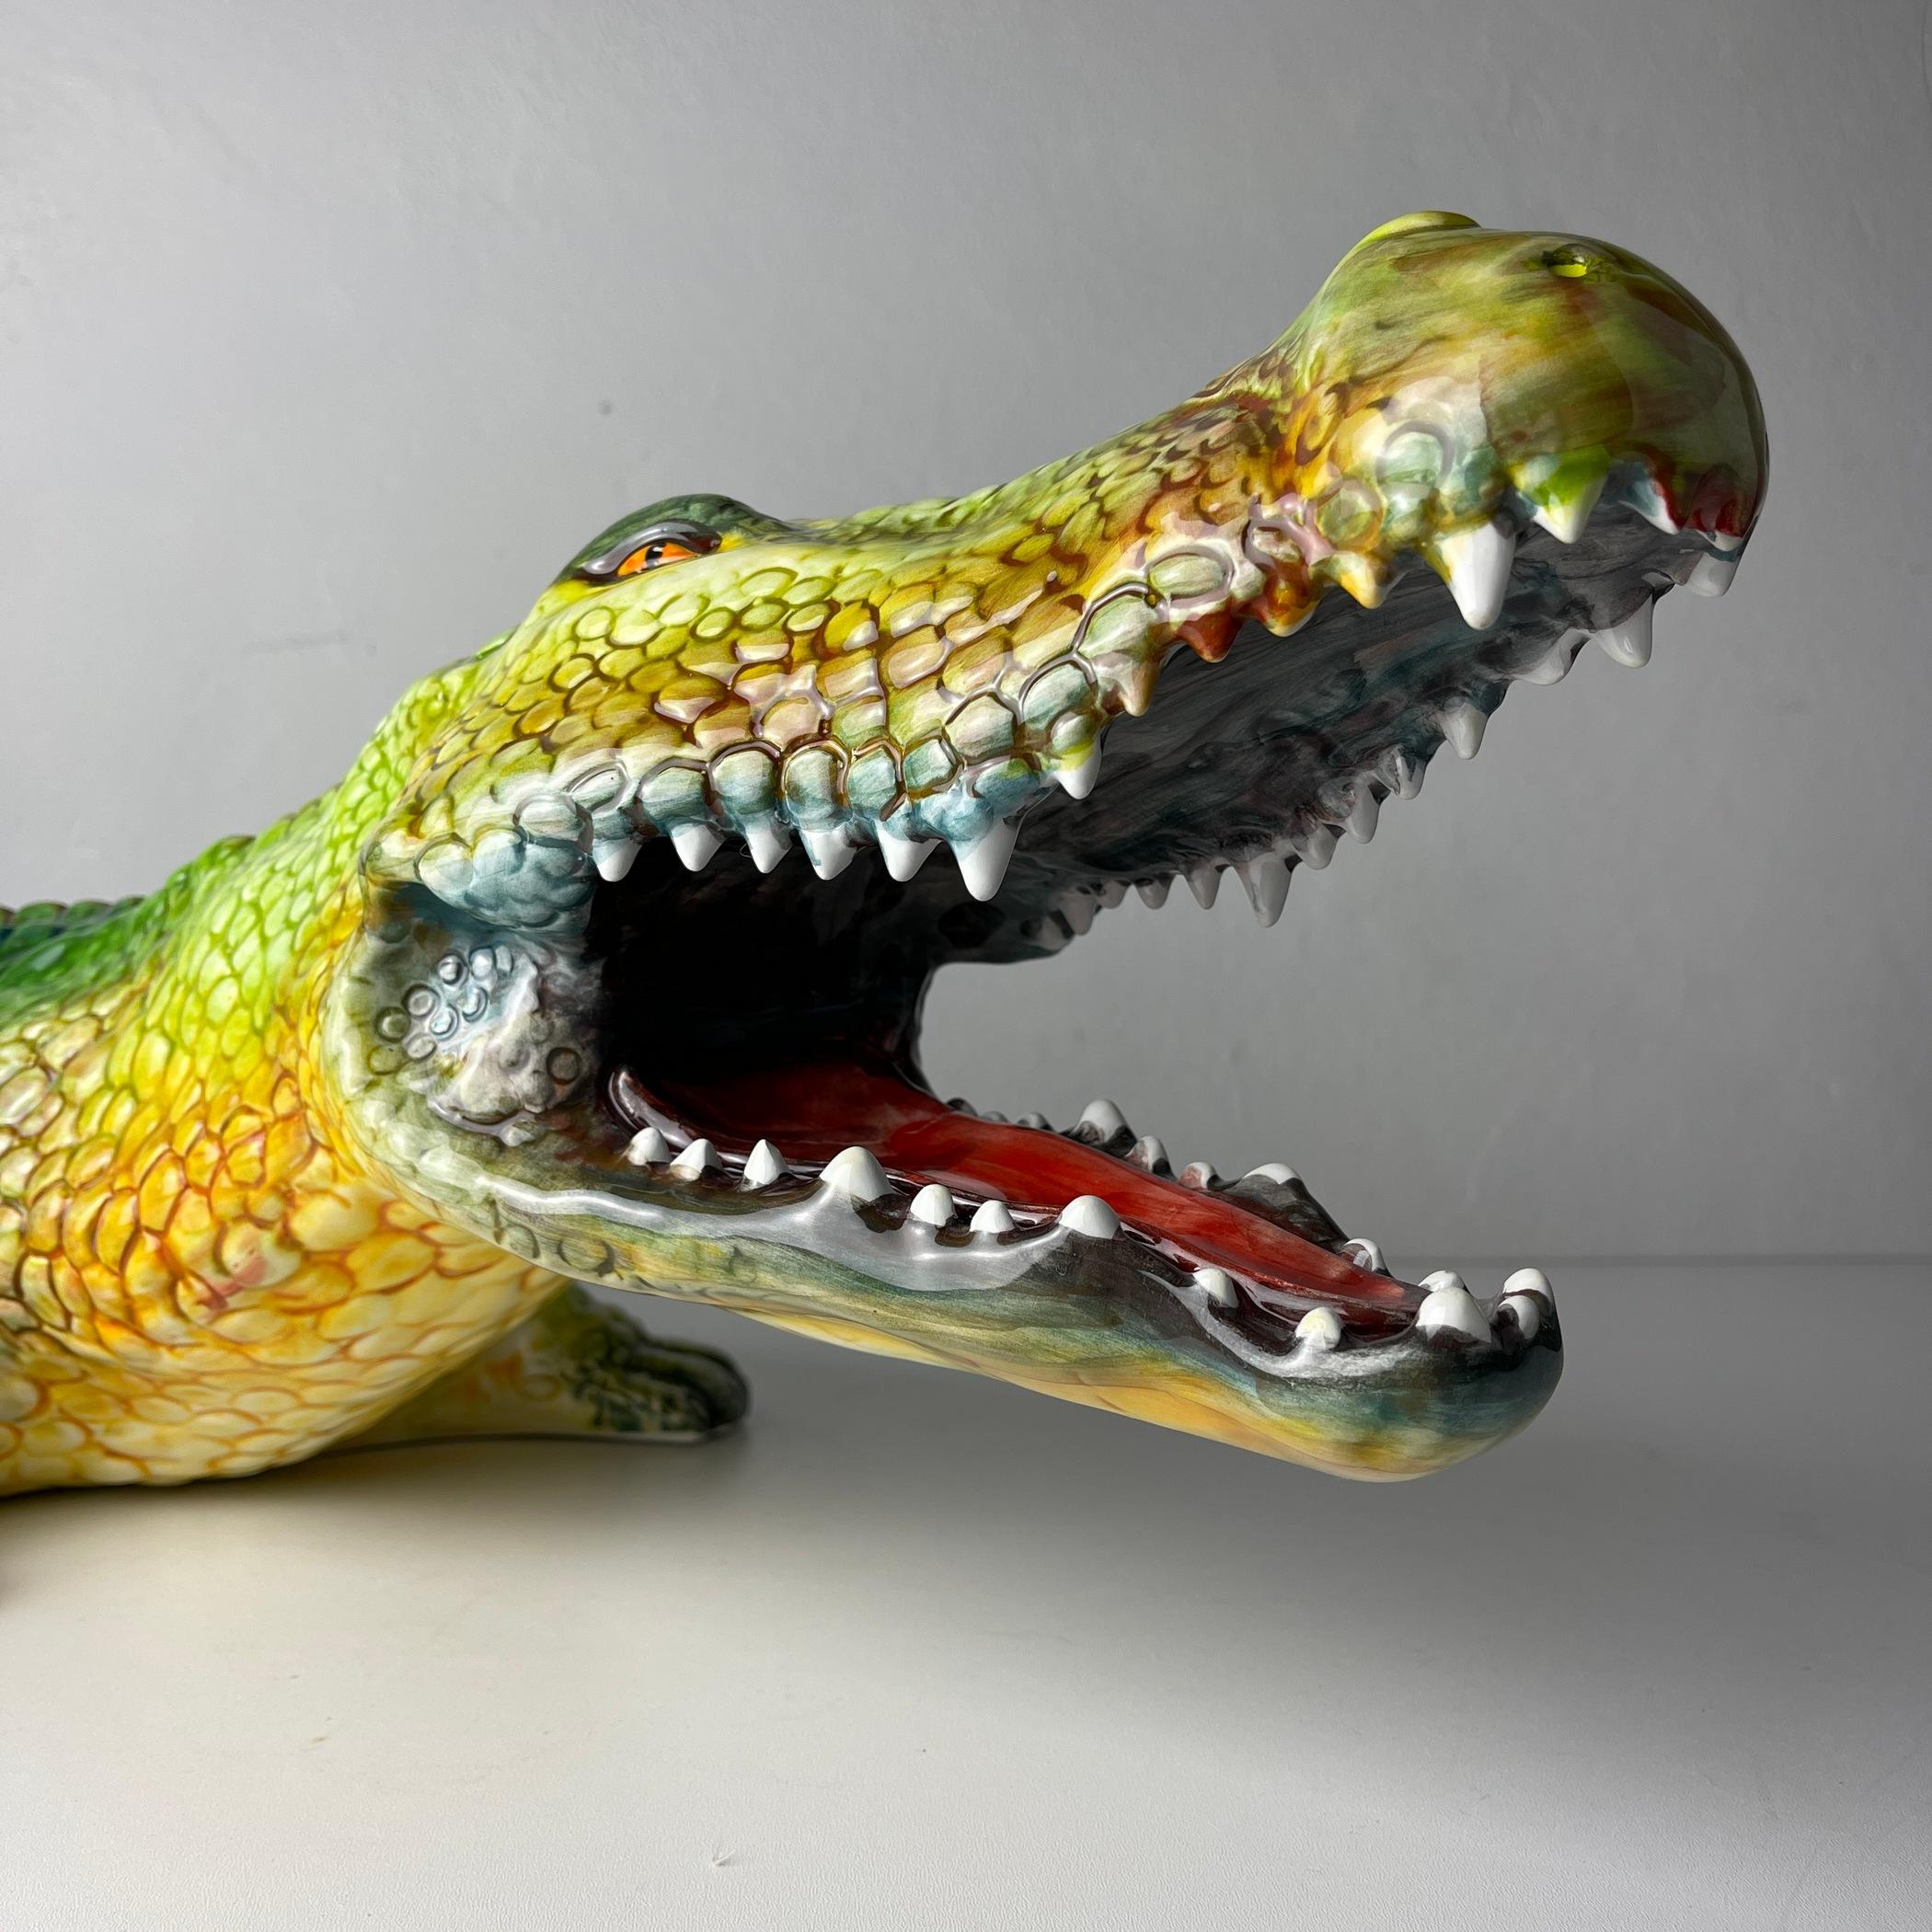 Mid-Century Modern Large Ceramic Sculpture Crocodile from Bassano Italy 1980s